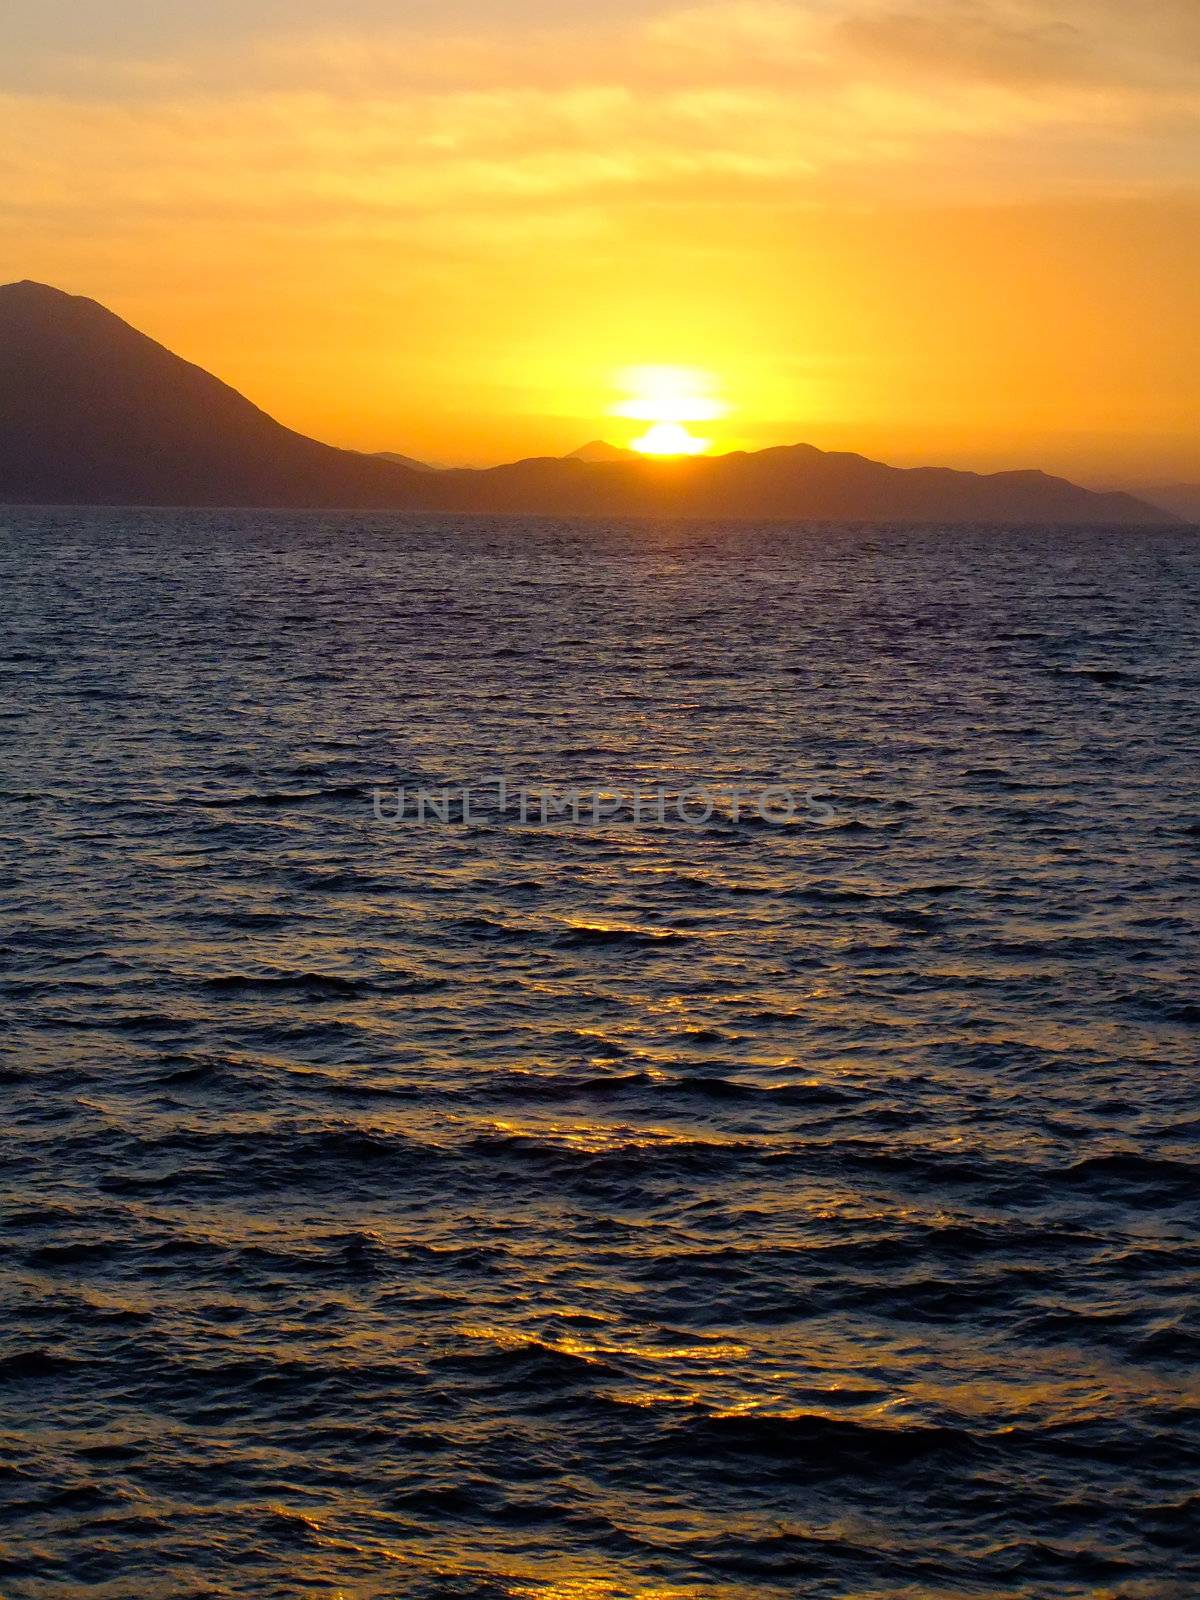 Sunrise near Hvar island, Adriatic sea, Croatia by donya_nedomam